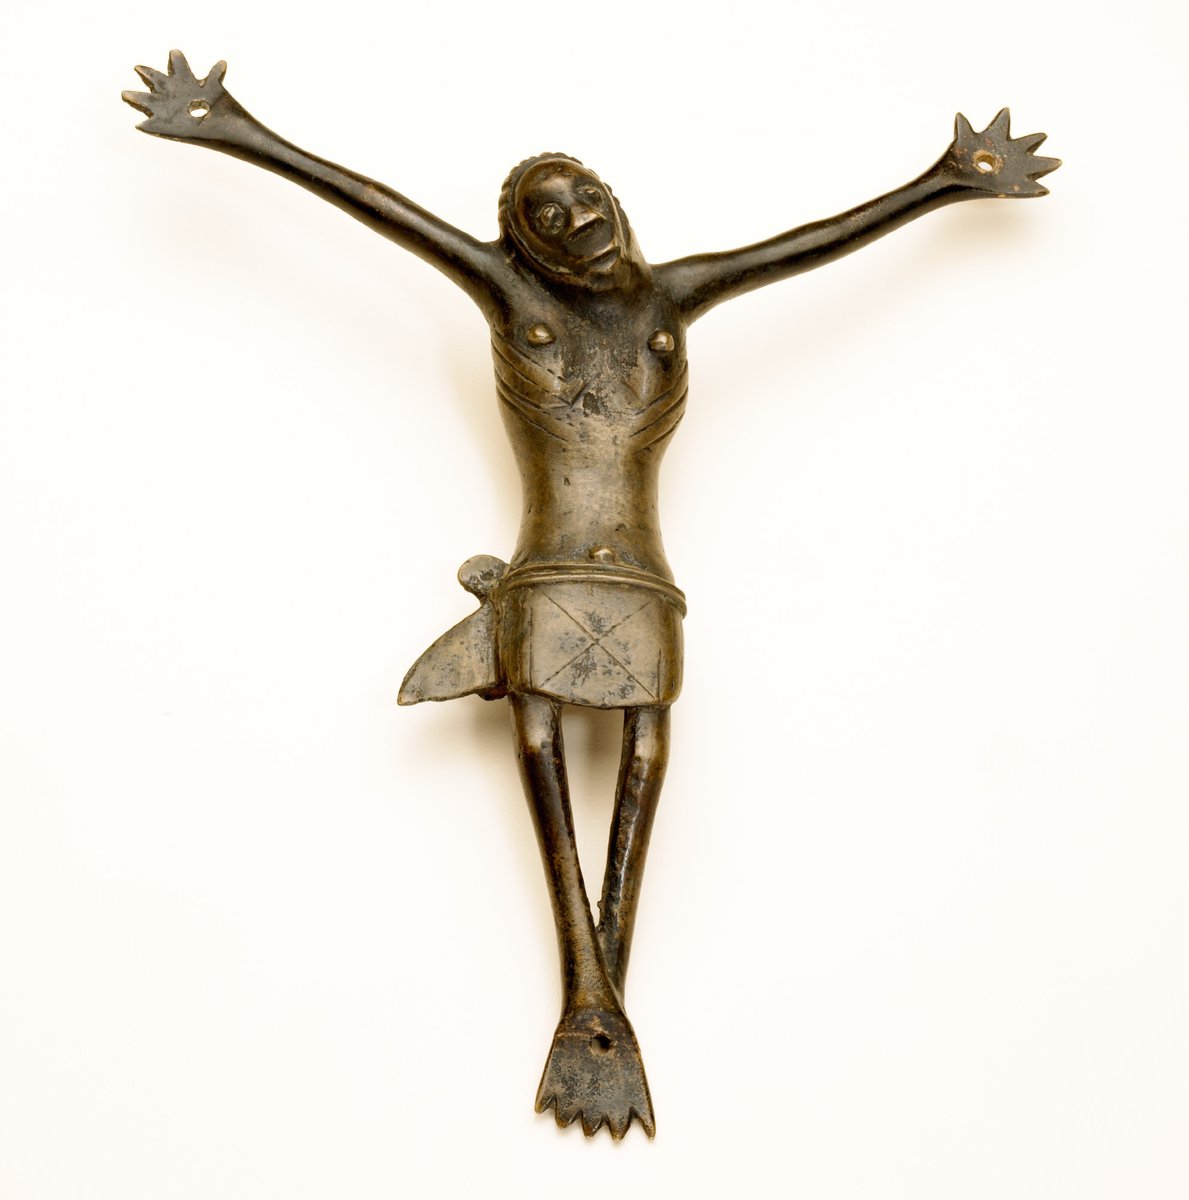 Title: Crucifix

Location: Democratic Republic of the Congo

Date: 17th century

si.edu/object/edanmdm… 

 #DemocraticRepublicoftheCongo #ArtBot